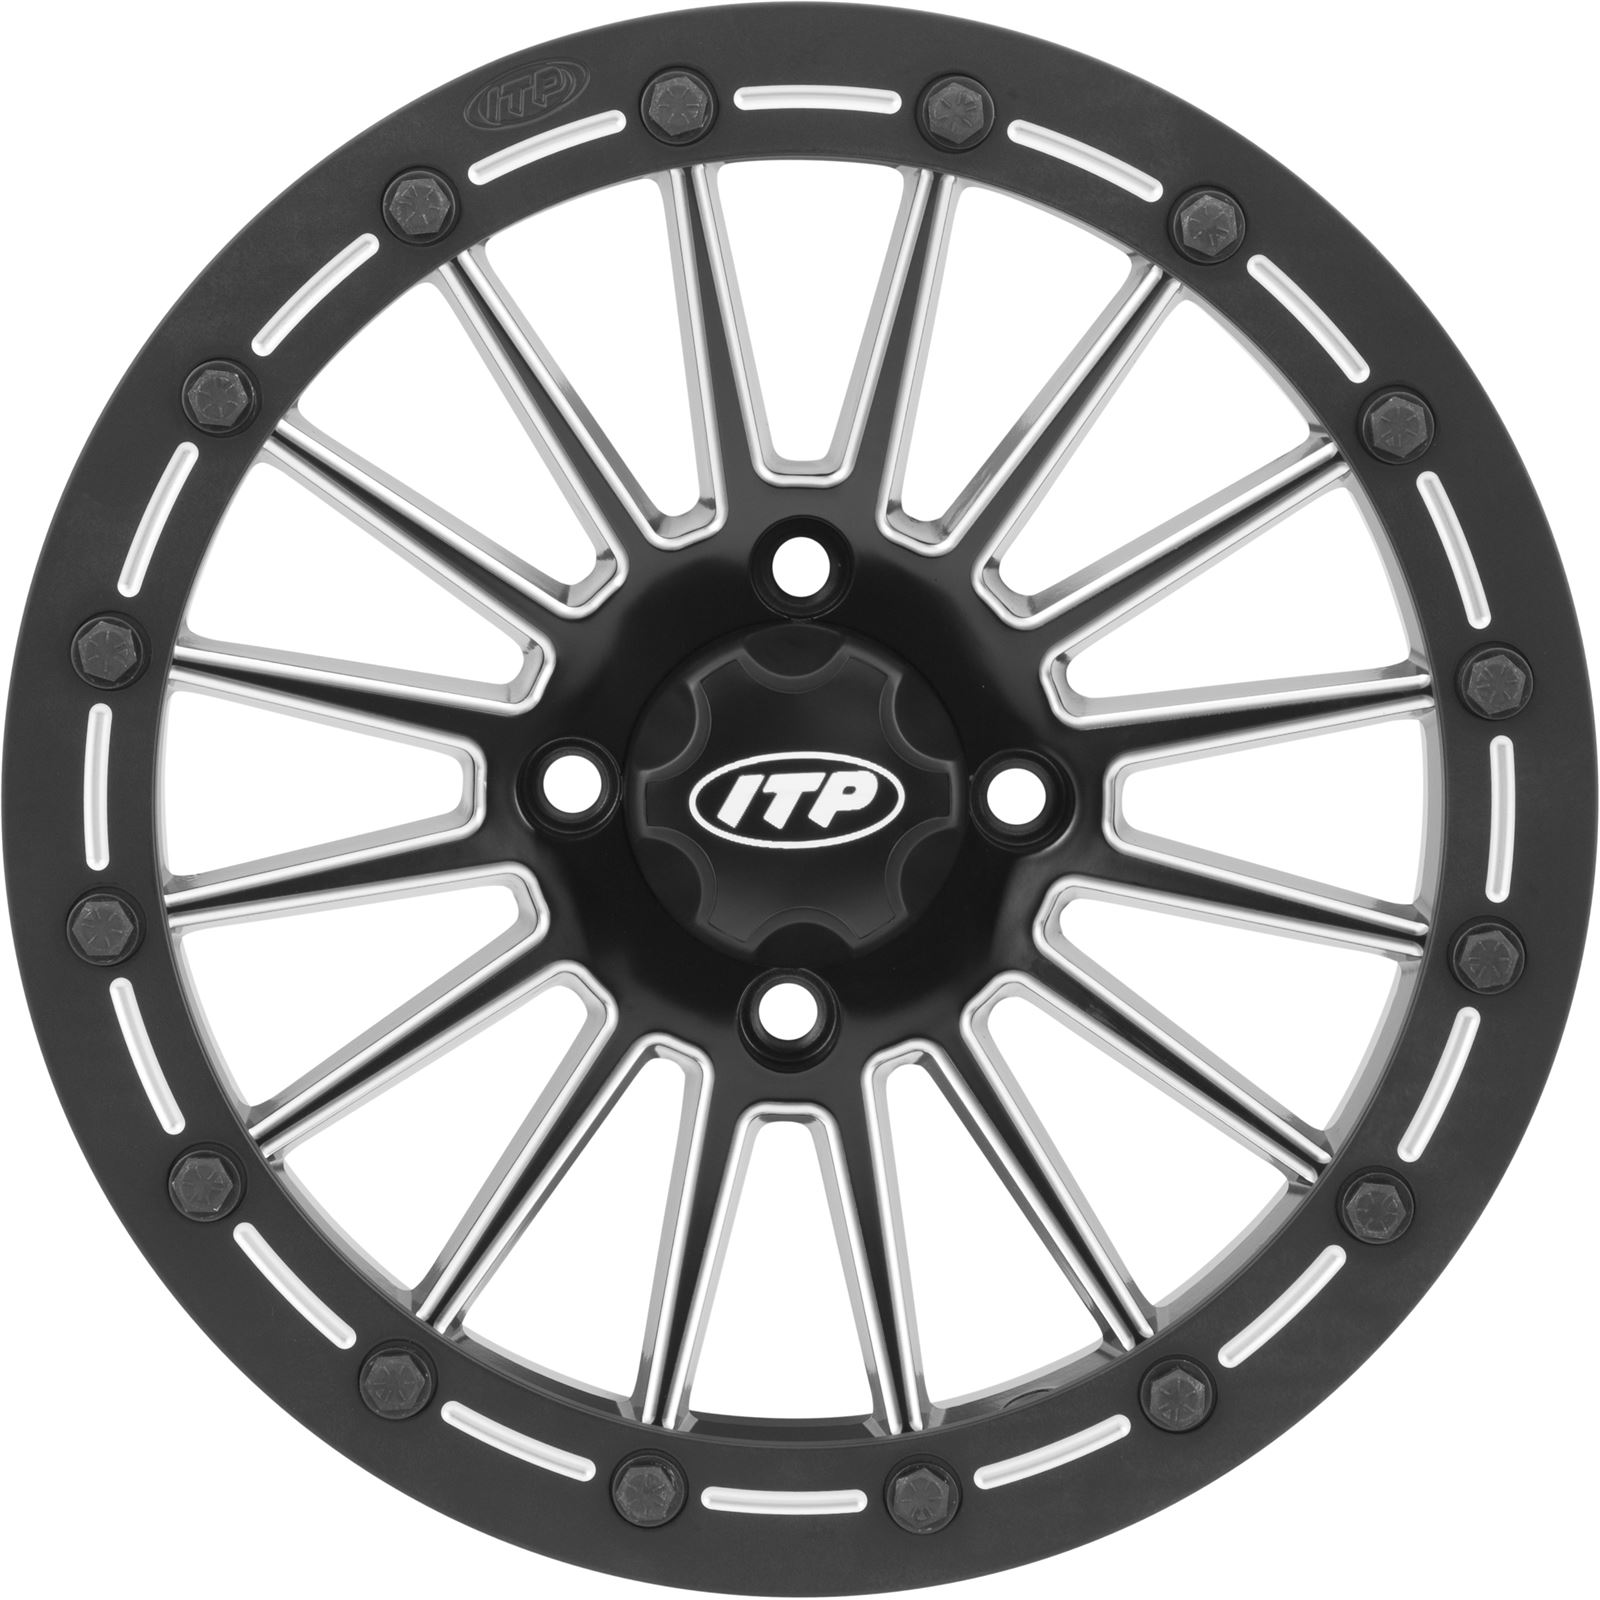 ITP Severe Duty Beadlock Wheels Matte Black 1528652536B